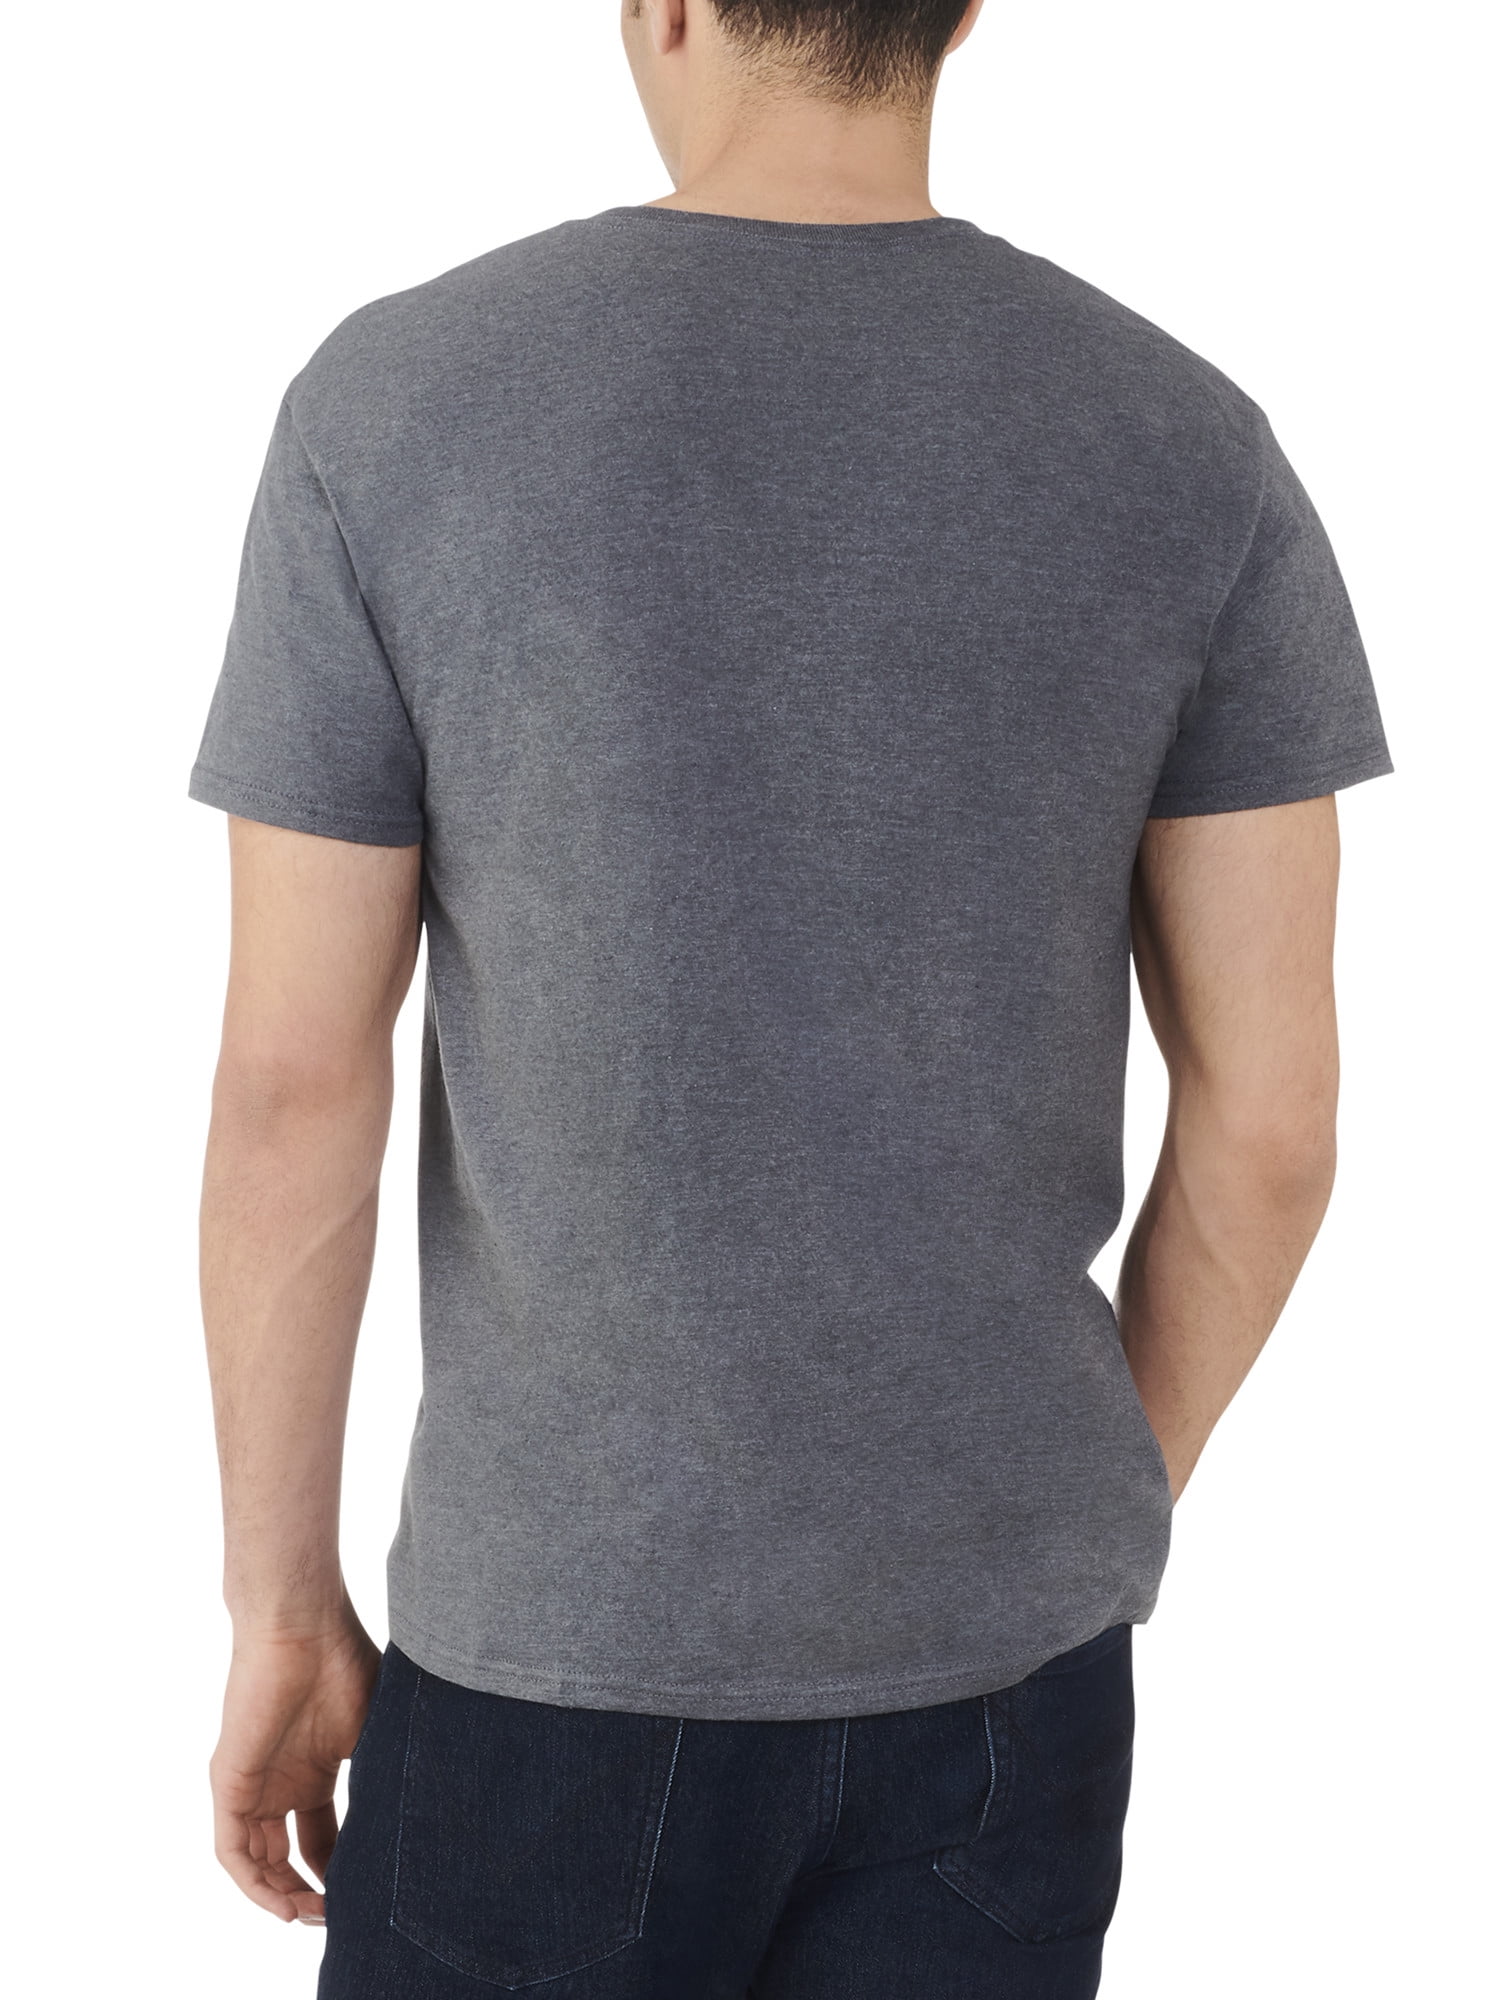 Nin Band Logo Black Color Short Sleeve Tshirt Size S 4XL Best Gift